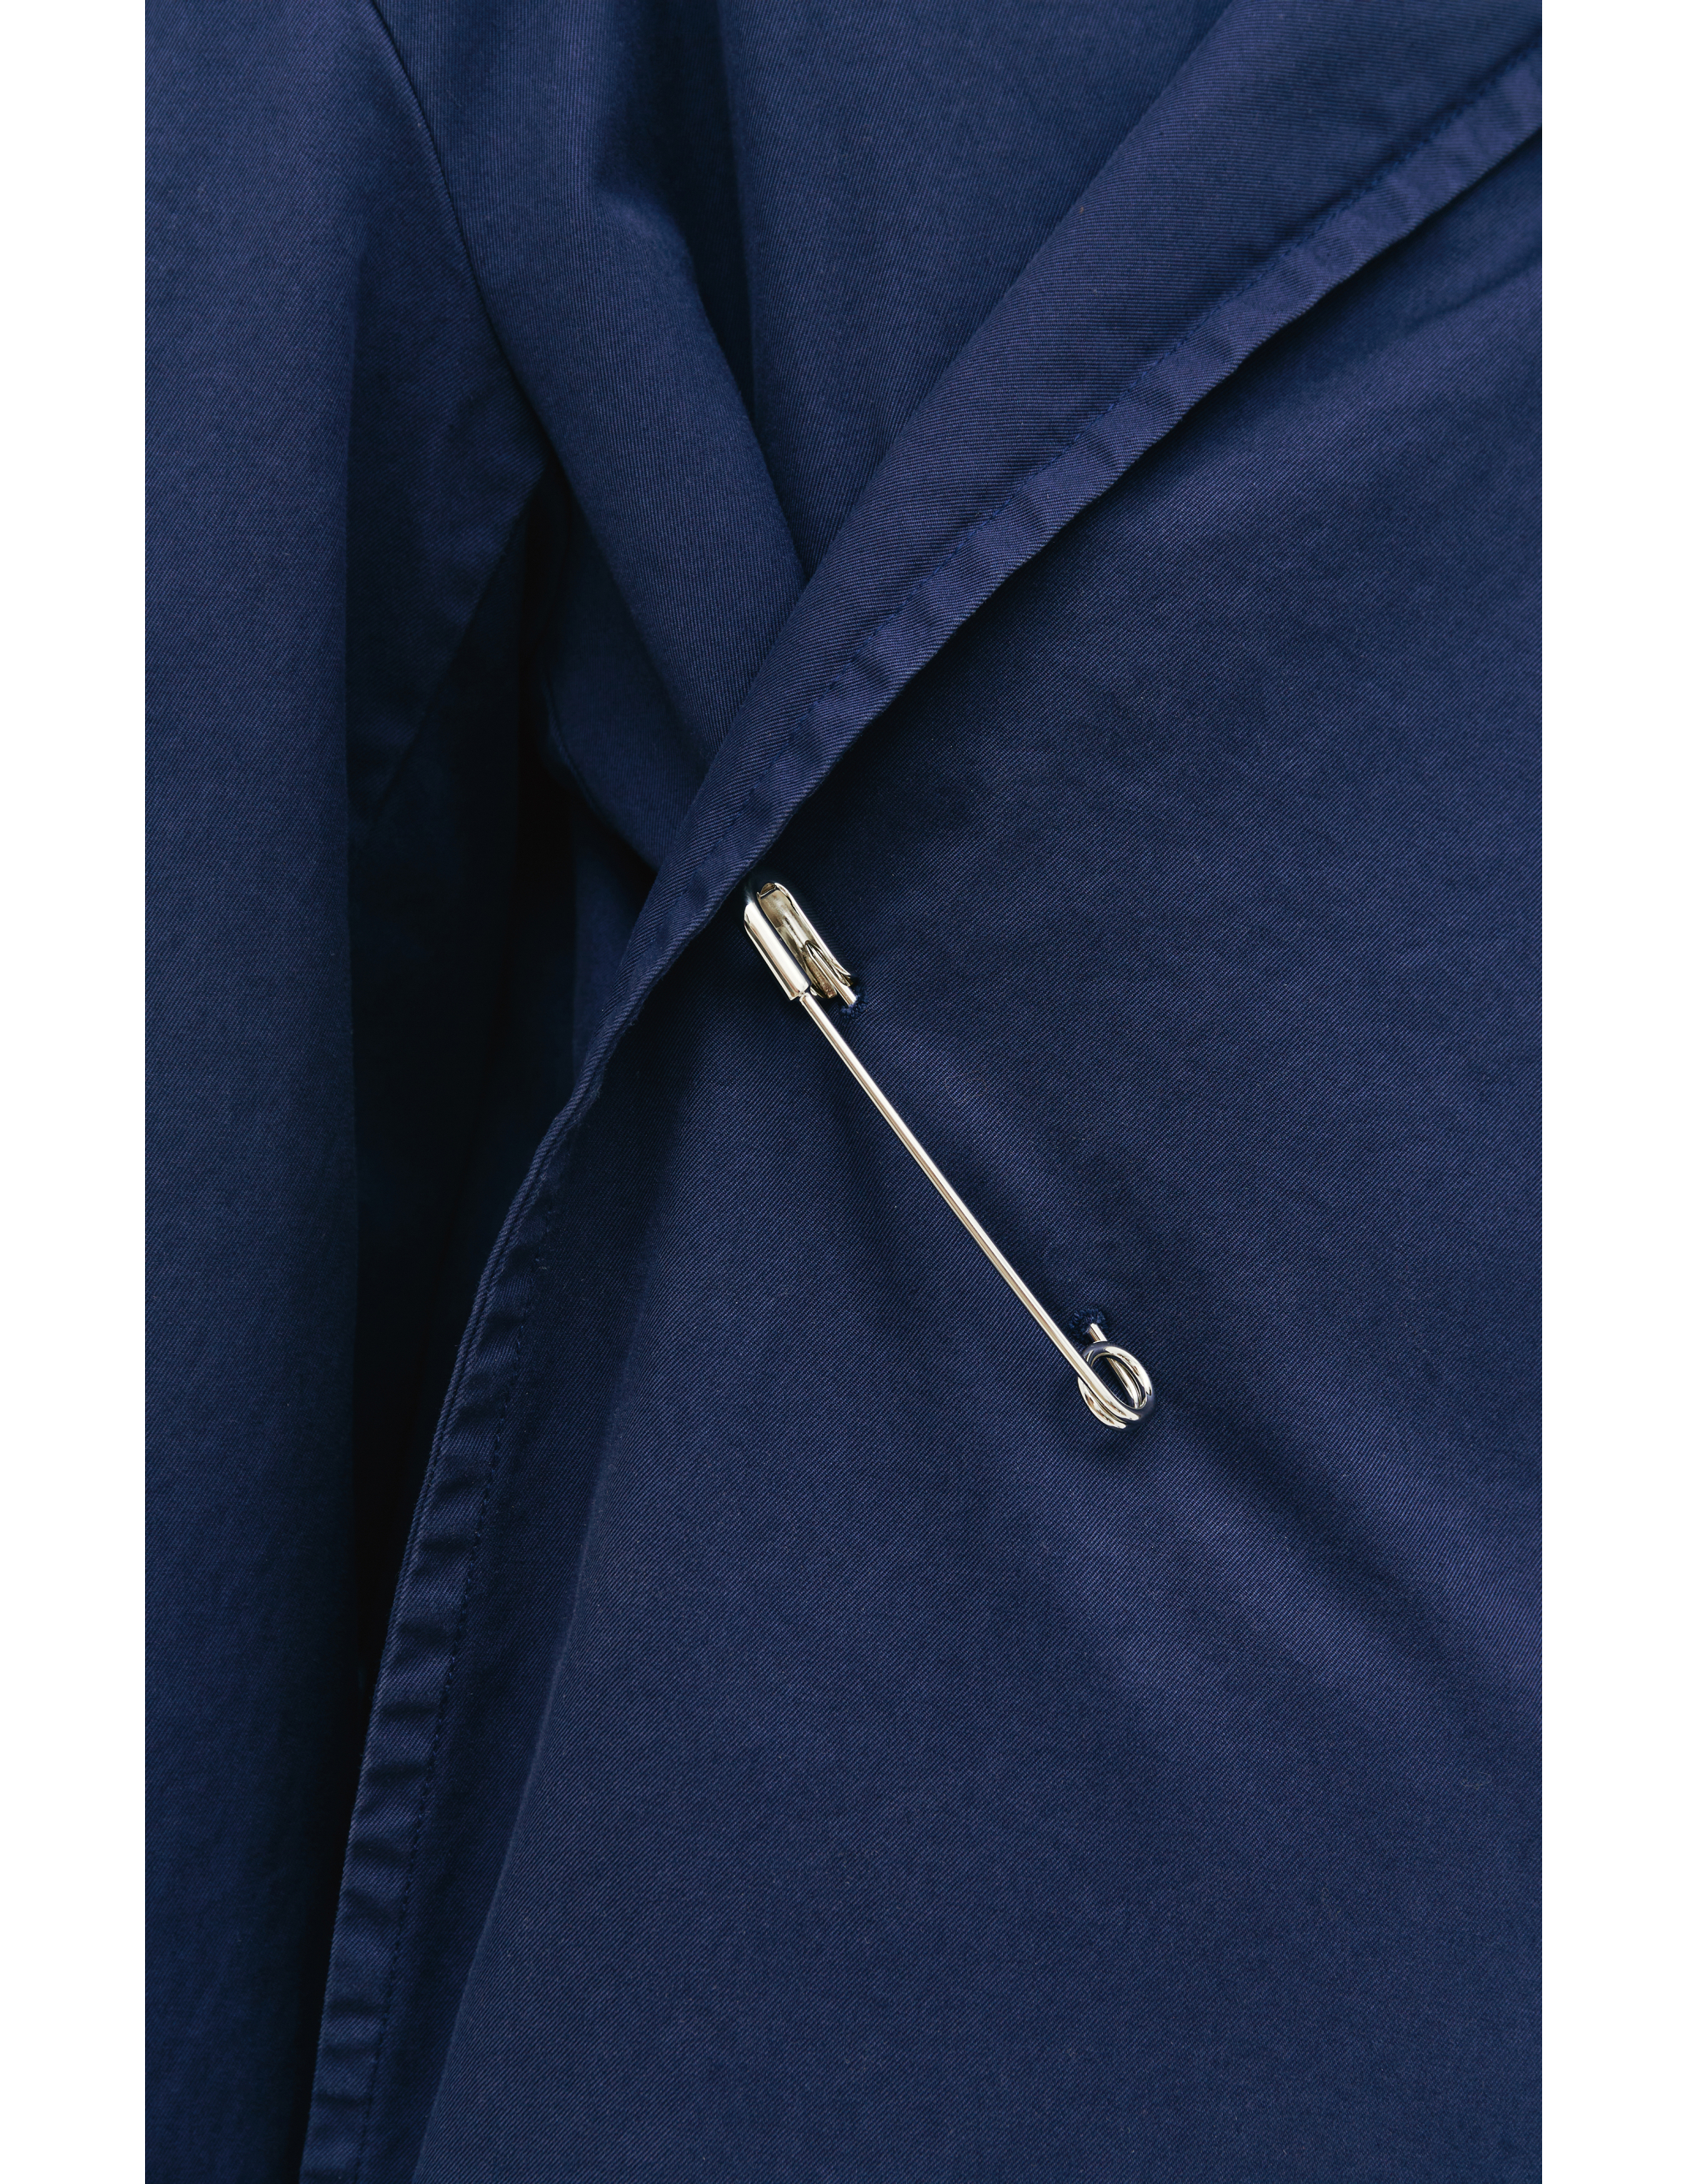 Оверсайз пальто с клетчатым подкладом Balenciaga 681165/TKP06/4140, размер 3 681165/TKP06/4140 - фото 8